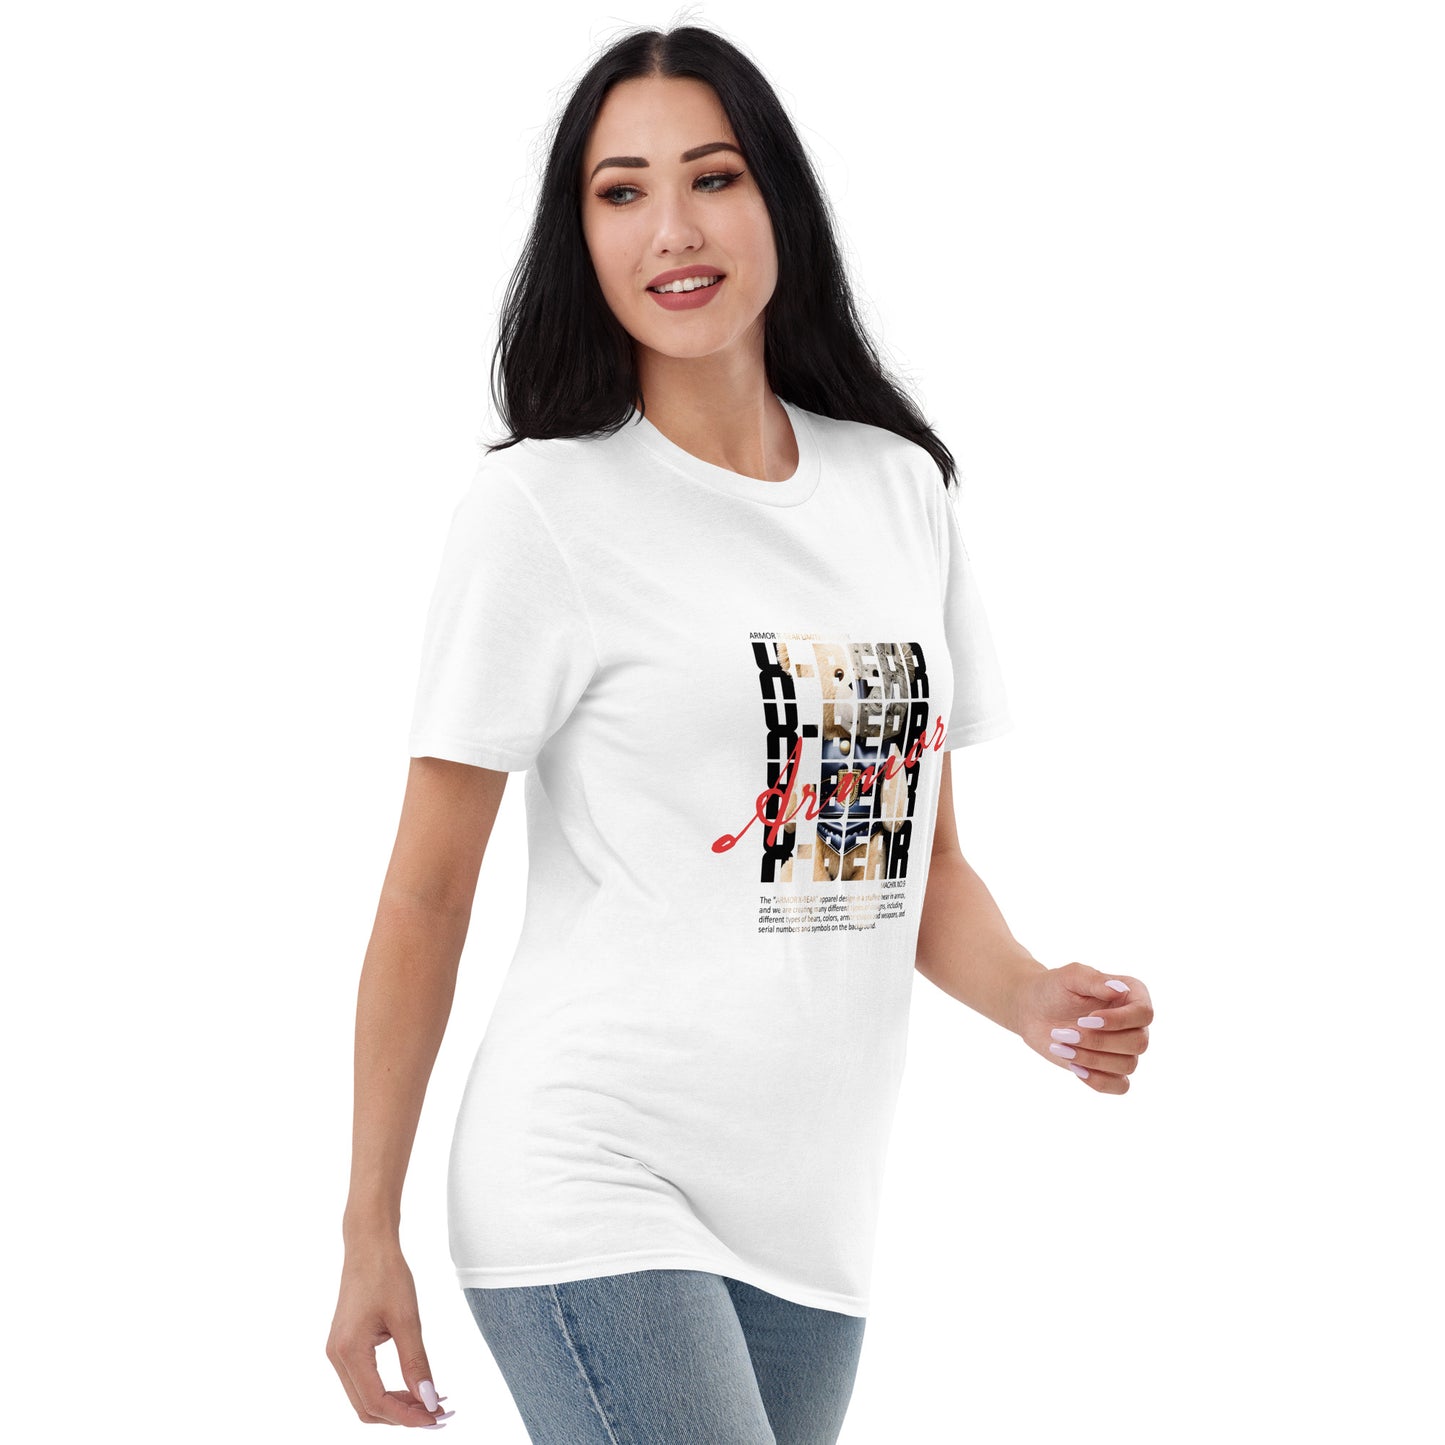 ARMOR X-BEAR LIMITED DESIGN MACHIN NO.9 TYPE-E | Unisex Lightweight T-shirt | White